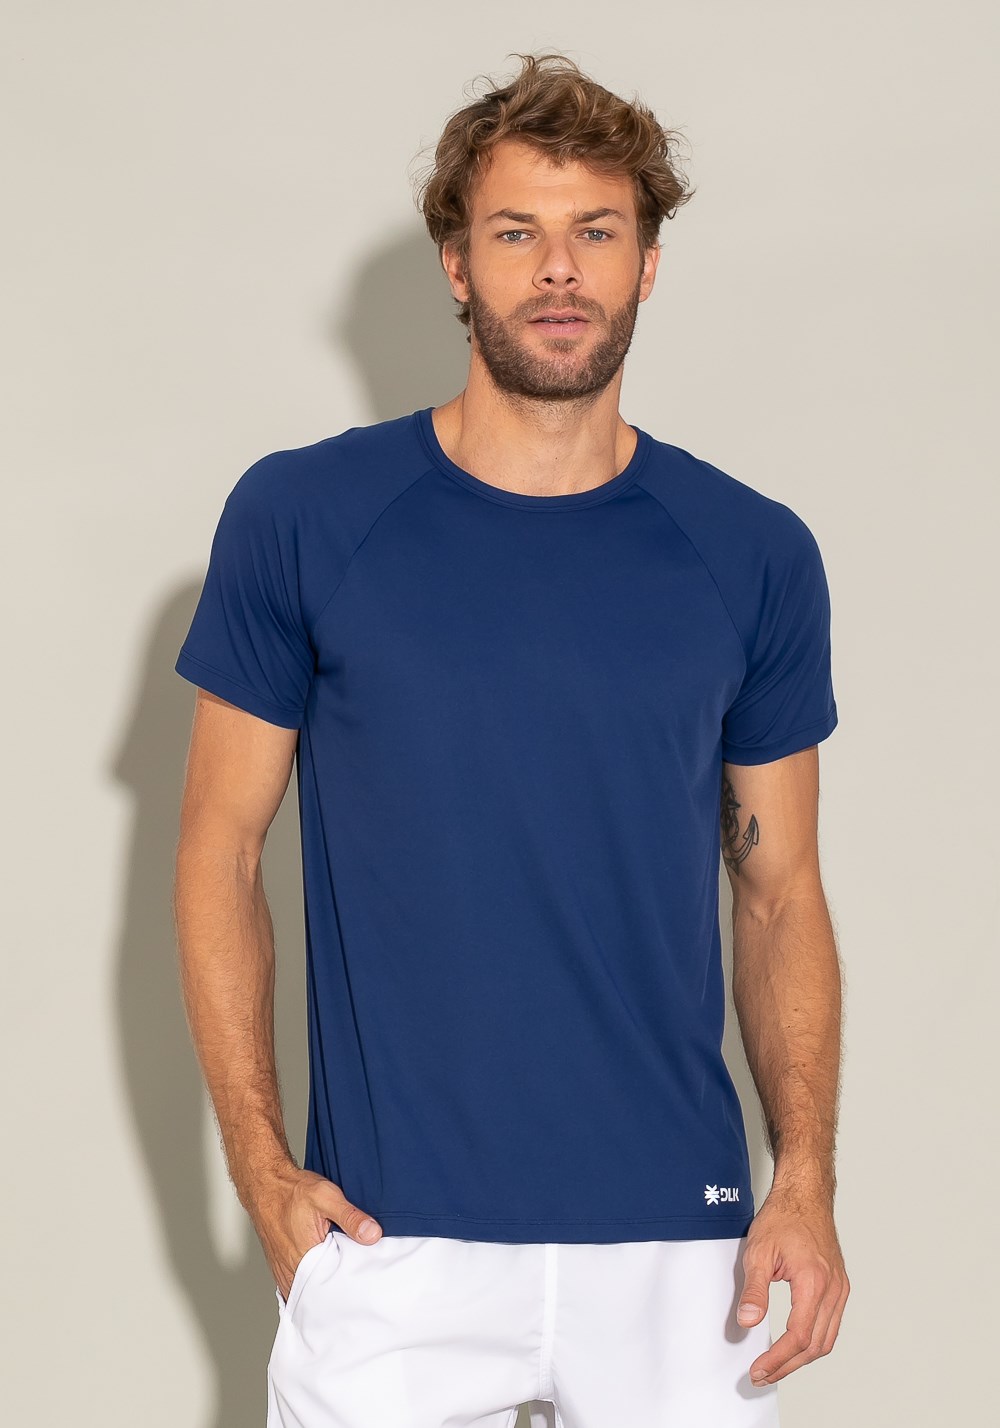 Camiseta poliamida manga curta modelo raglan for men azul marinho